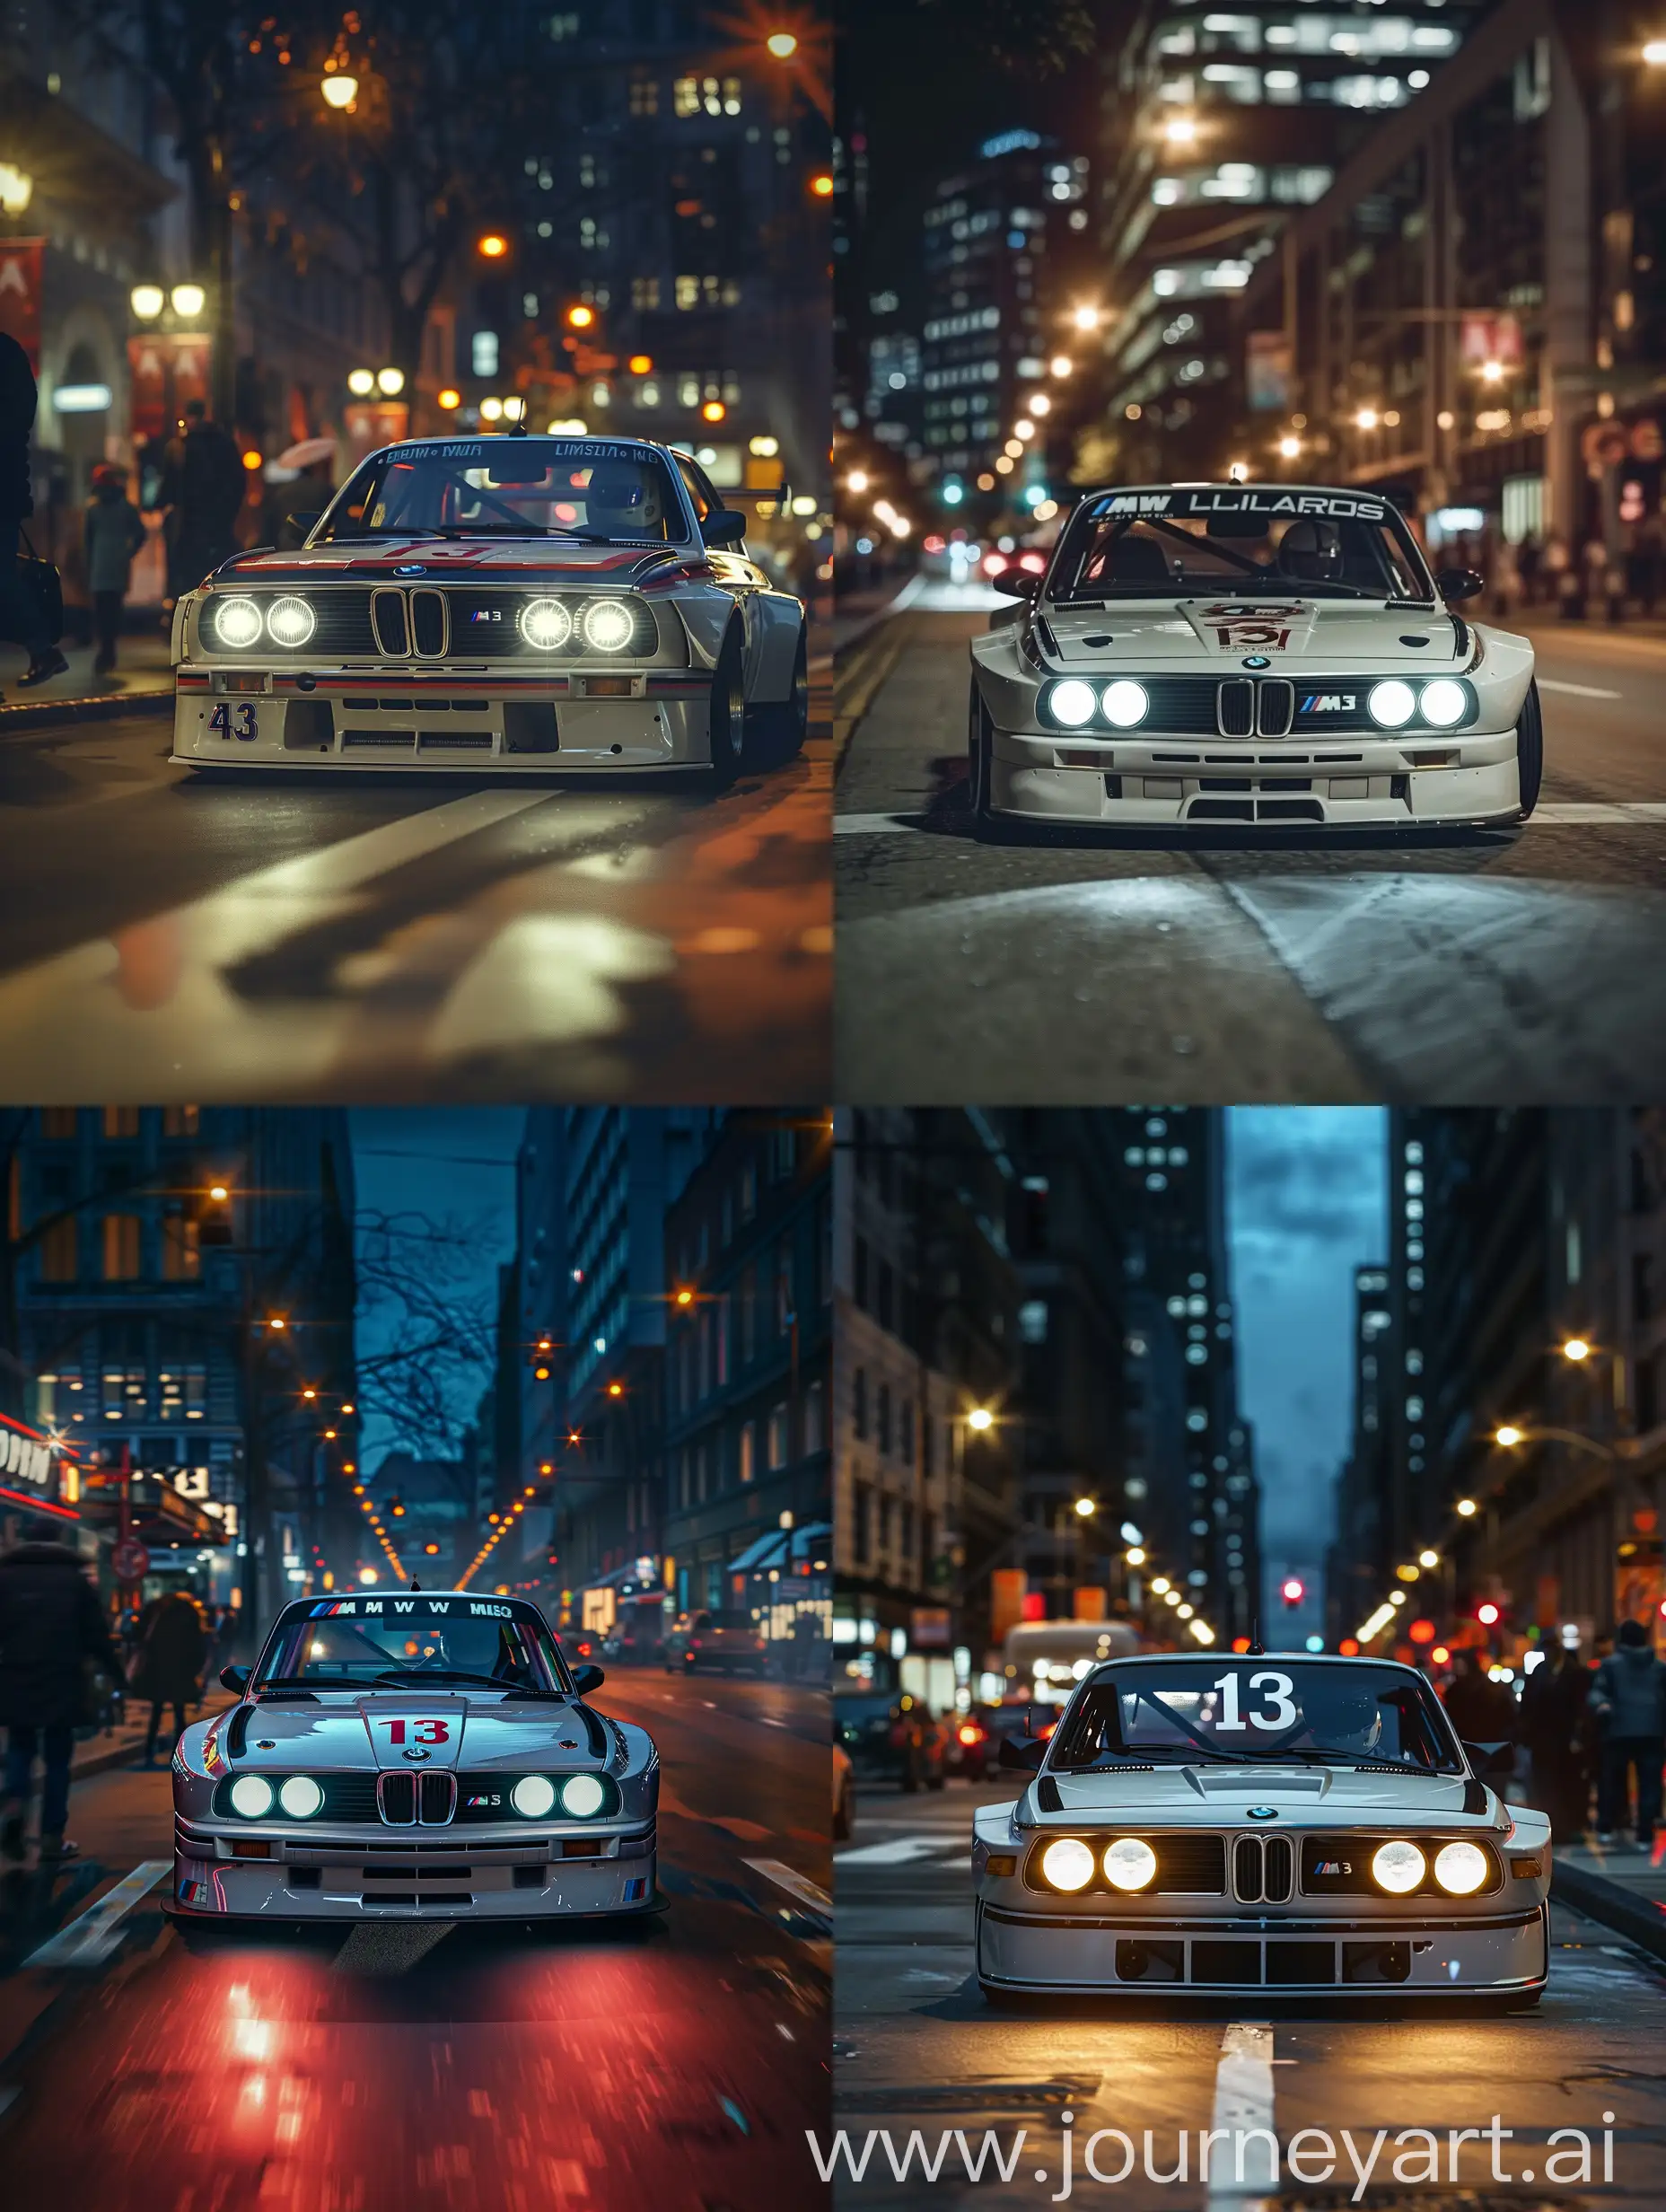 BMW-M3-GTR-Racing-Through-Urban-Night-Speed-and-Adrenaline-in-High-Resolution